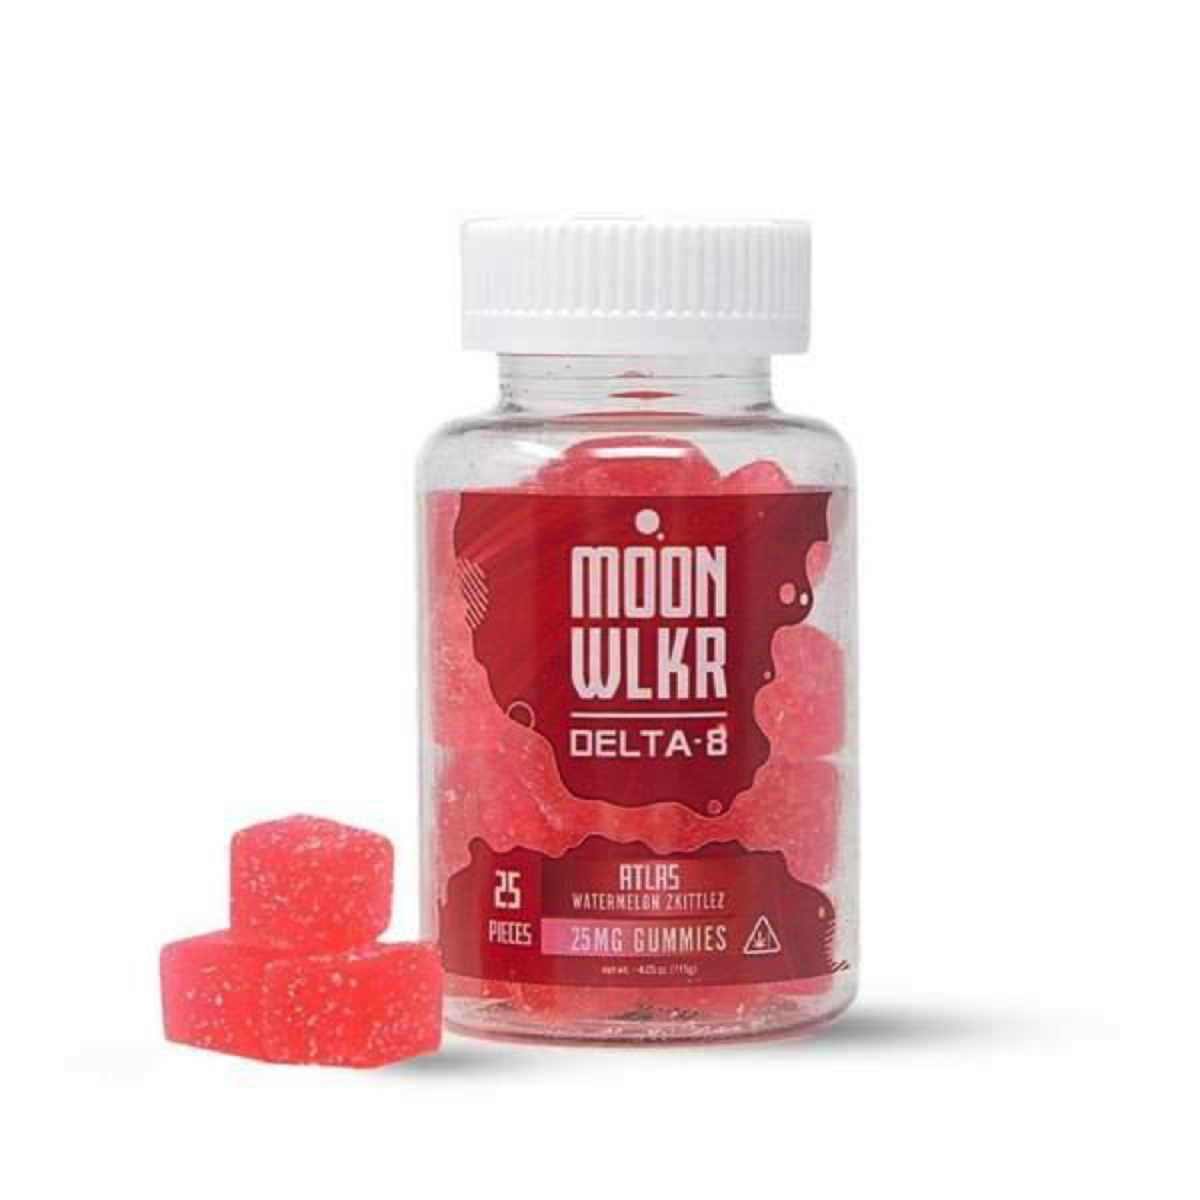 Moonwlkr's D-8 THC Gummies